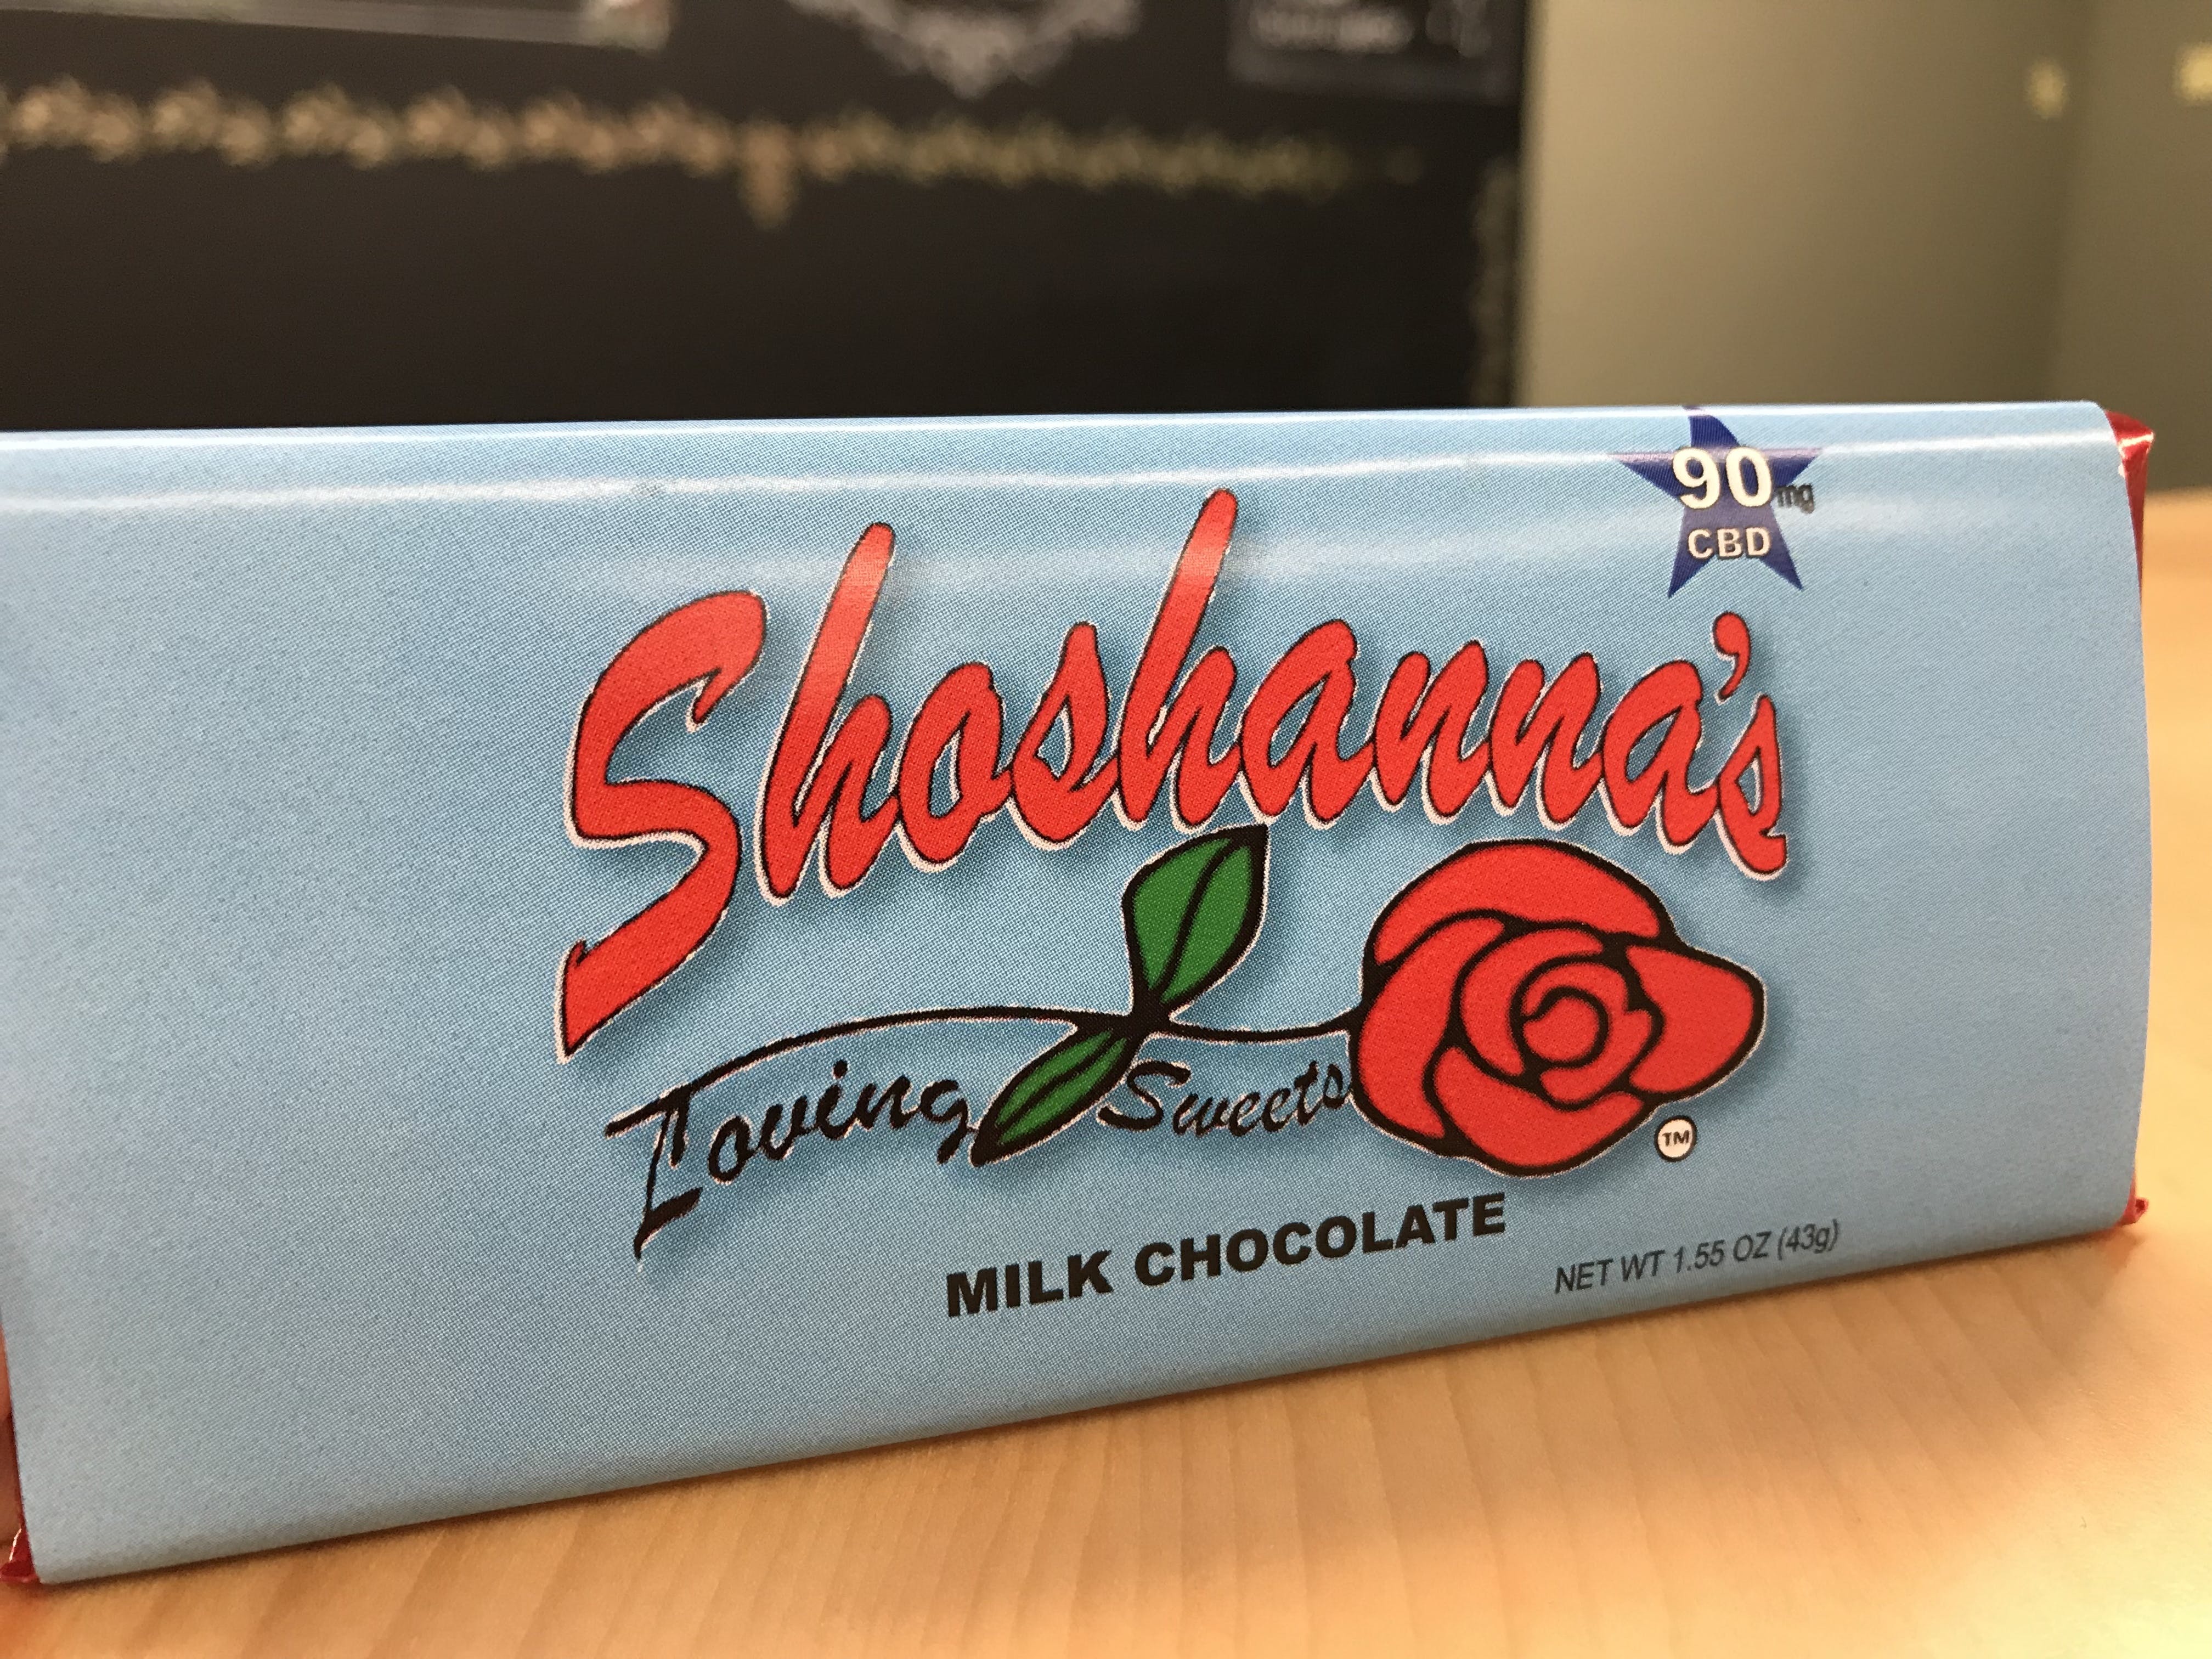 edible-cbd-shoshanas-90mg-milk-chocolate-bar